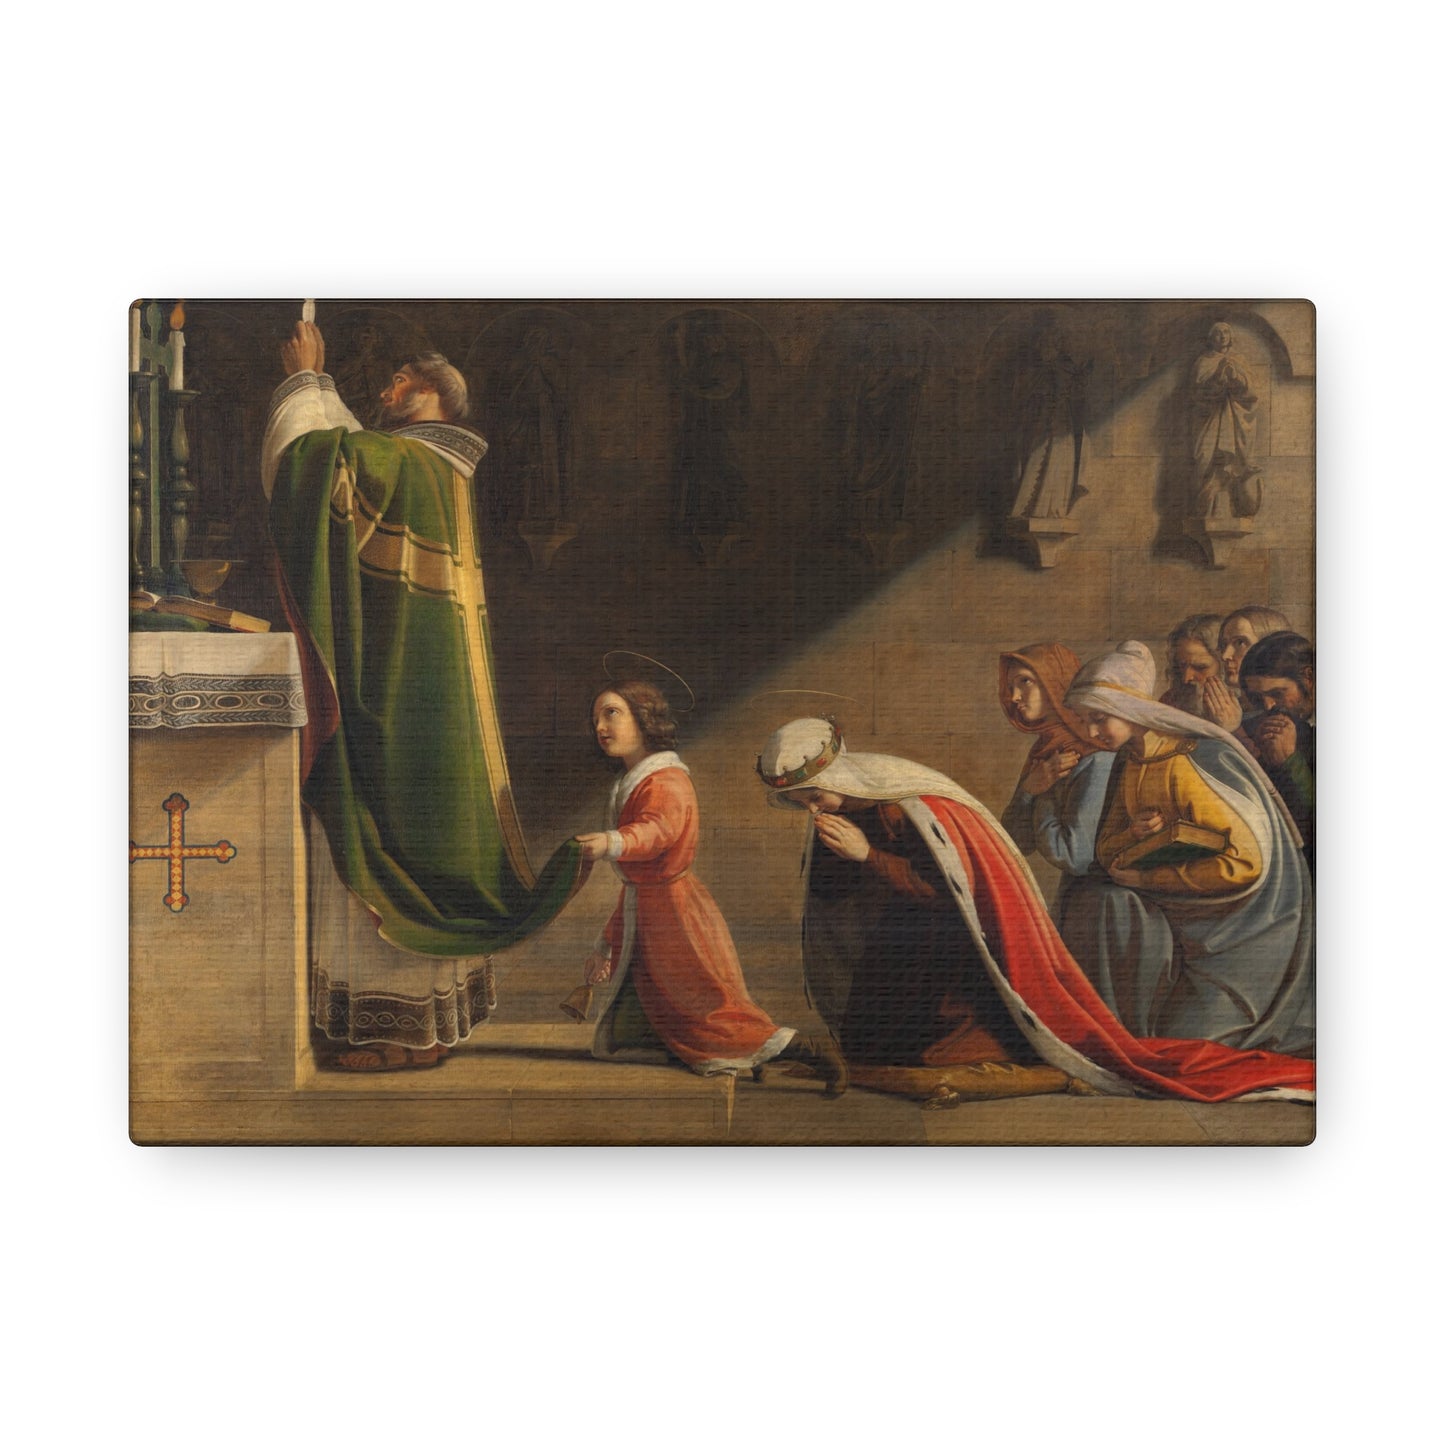 Saint Wenceslas and Saint Ludmila in mass 1837 Frantisek Tkadlik, Catholic Canvas Print, Religious Home Art, All Saints Day, House Warming